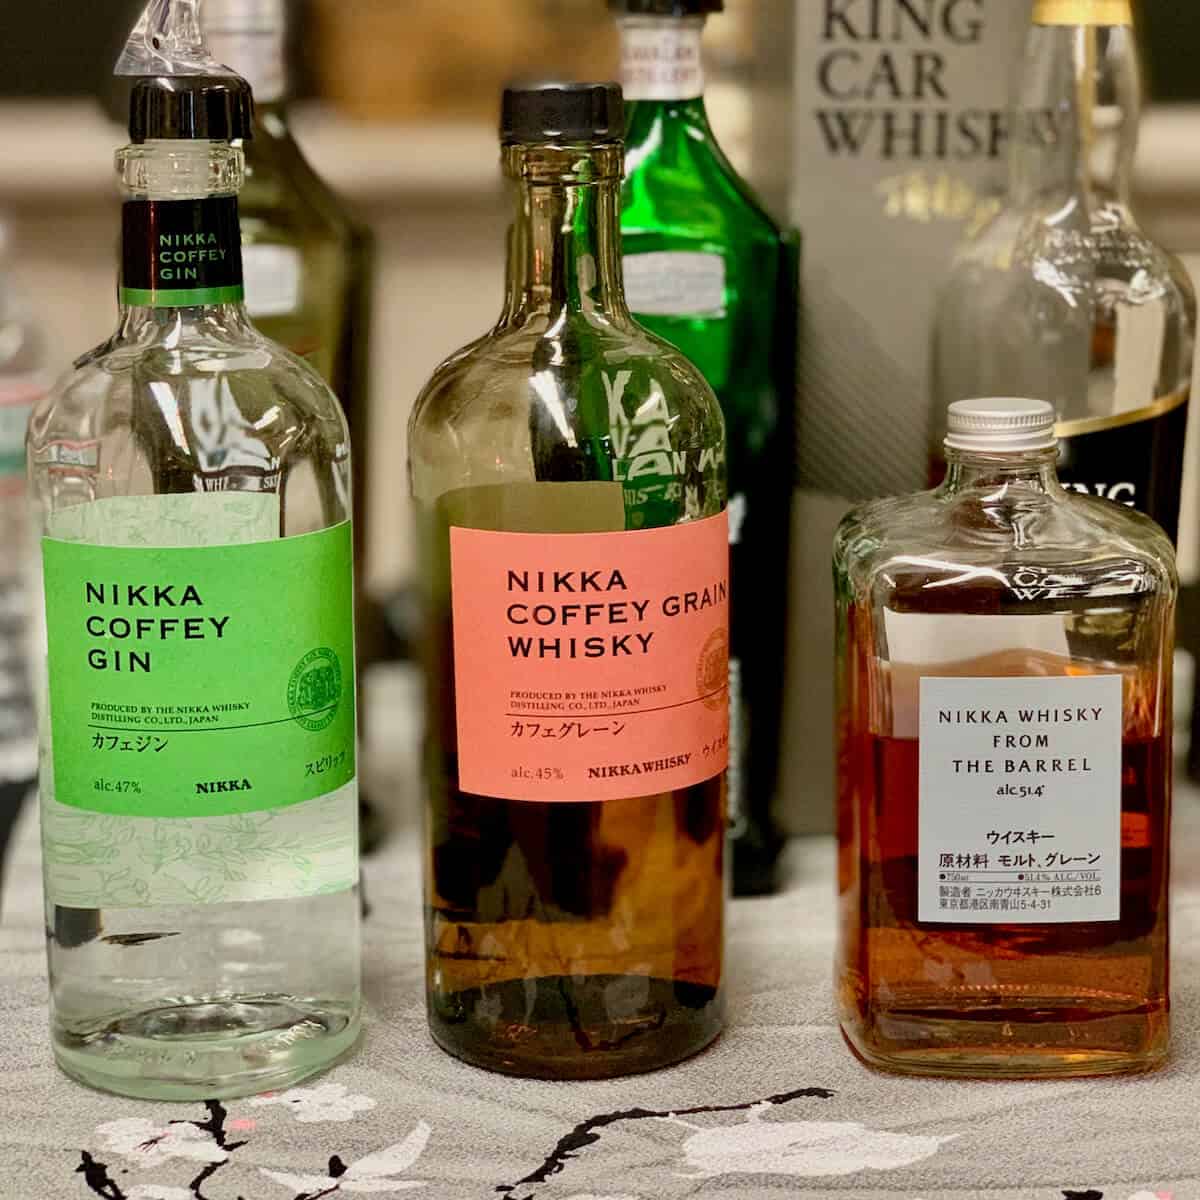 Nikka Coffey Gin, Coffey Grain, Nikka Whisky from the barrel in bottles on a table.